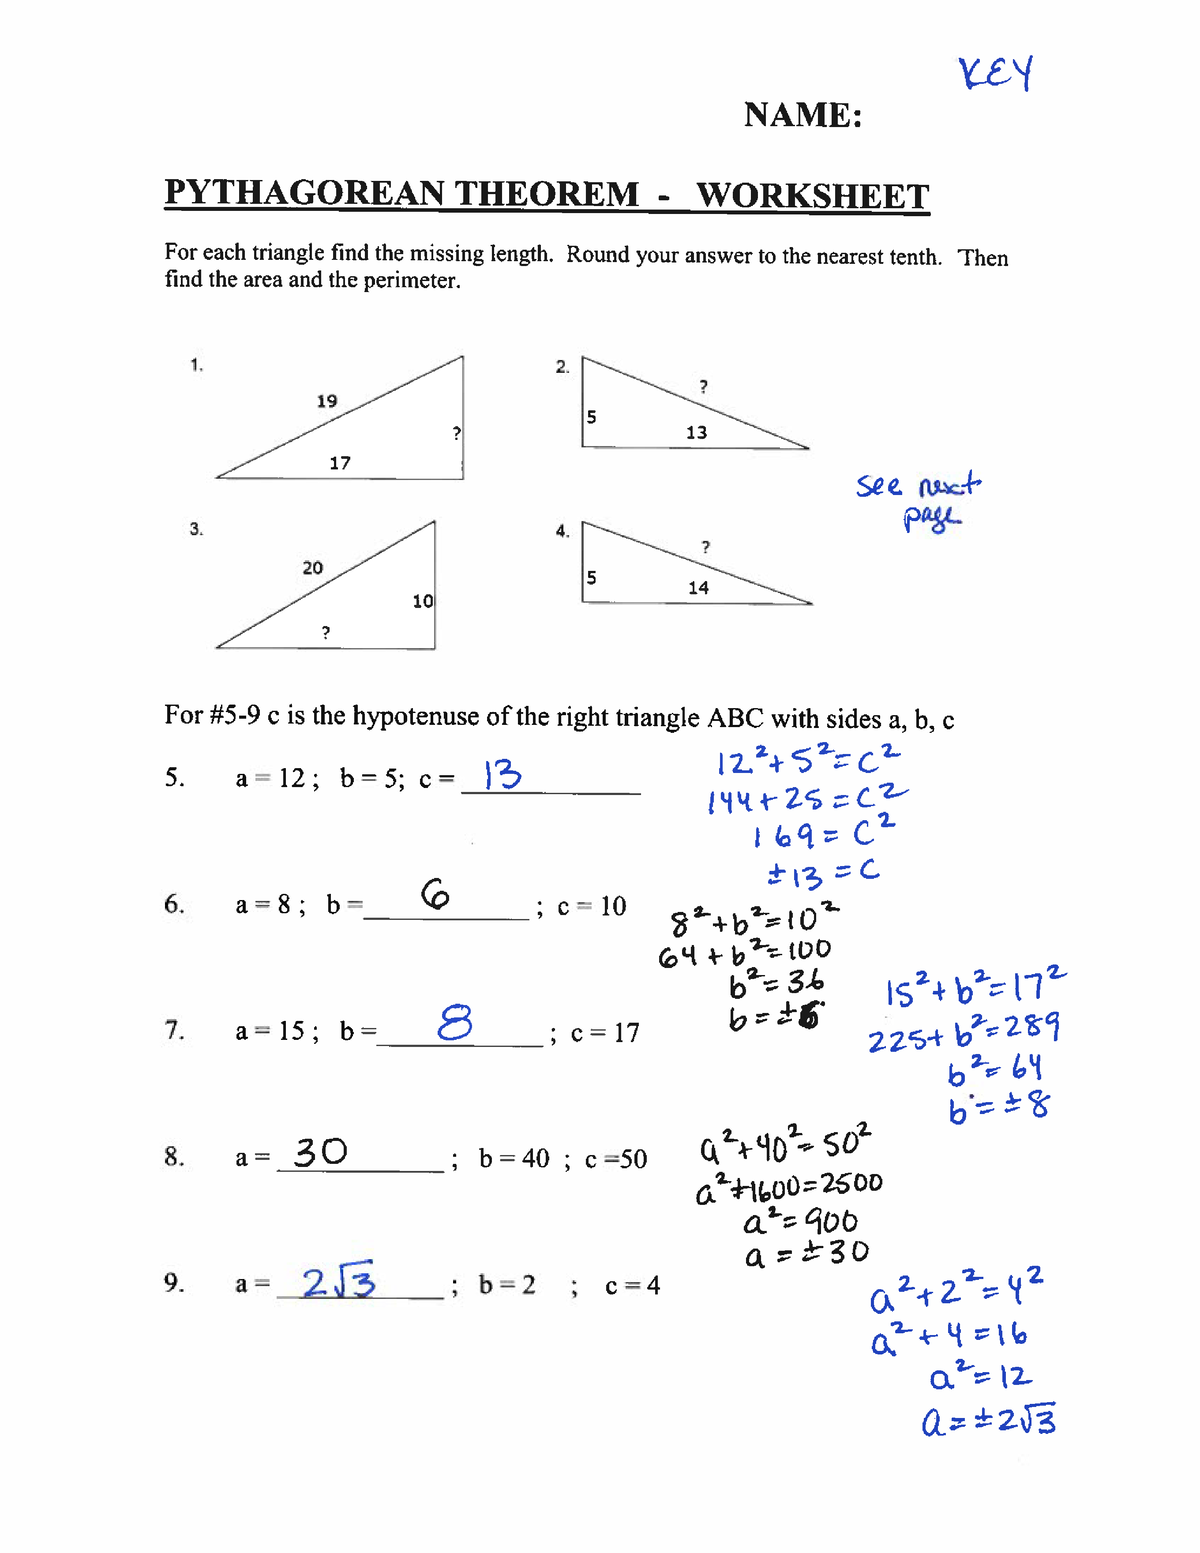 pythagorean theorem graded assignment answer key